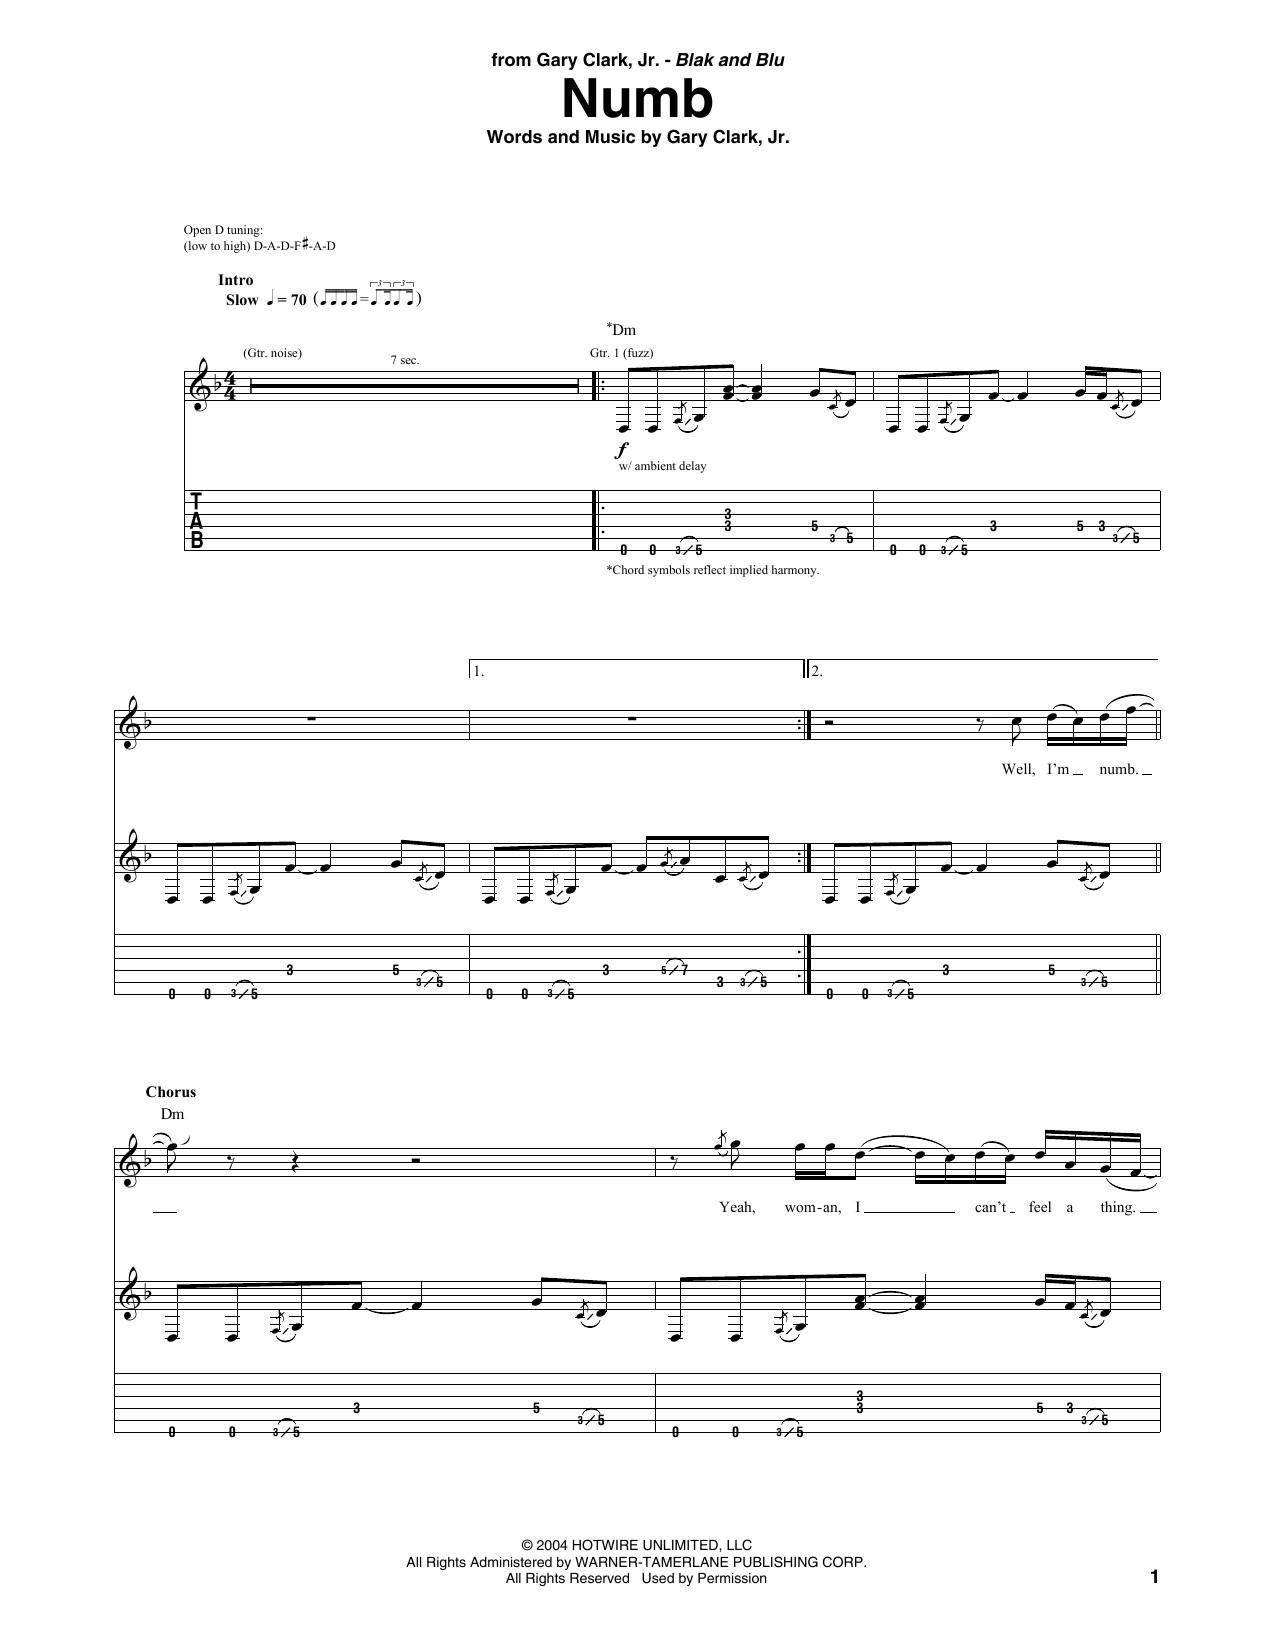 Gary Clark, Jr. Numb Sheet Music Notes & Chords for Guitar Tab - Download or Print PDF